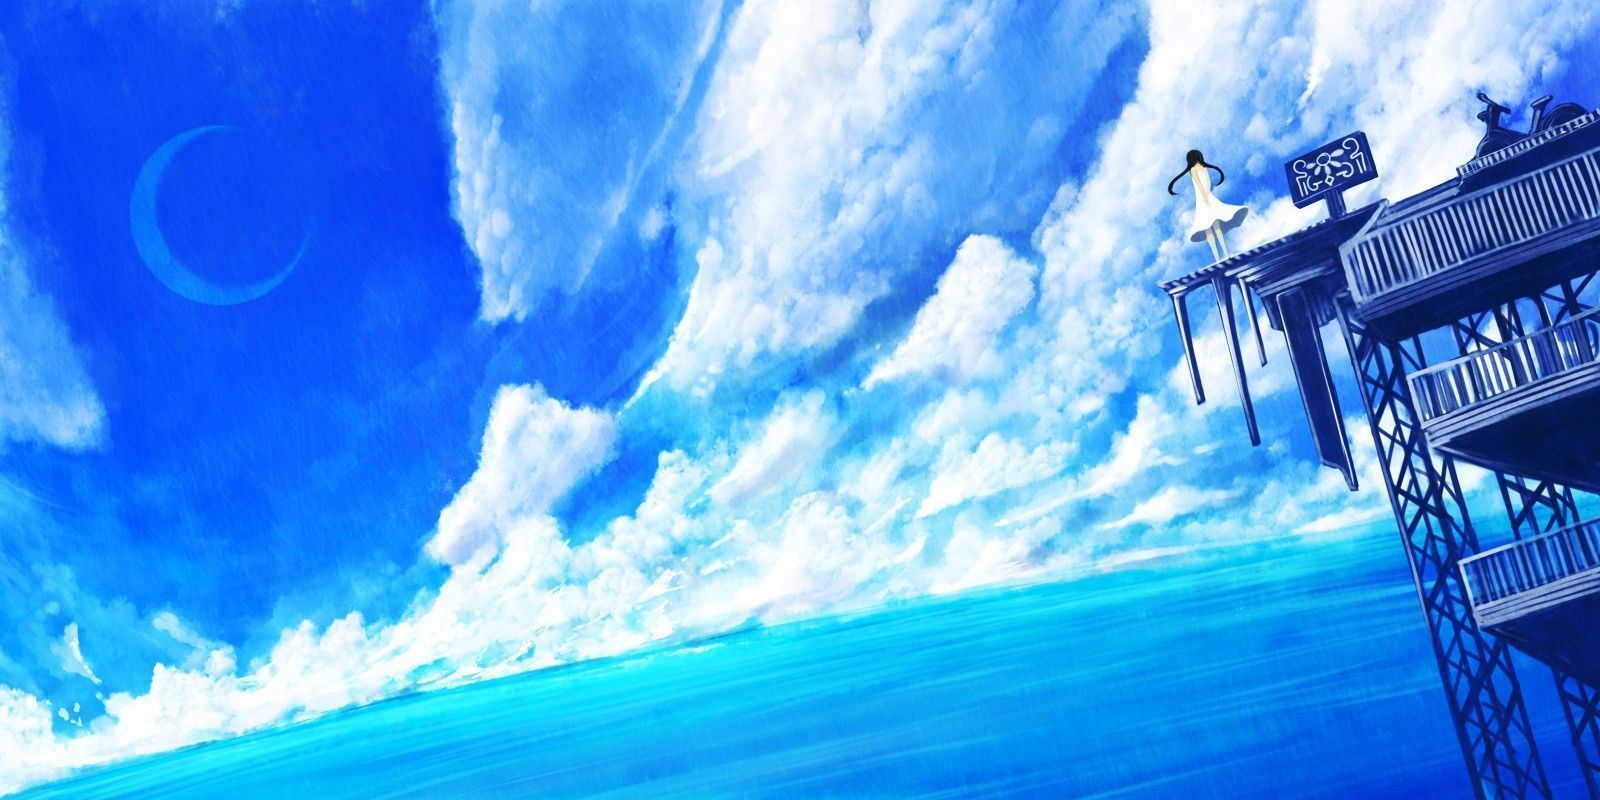 Blue Anime Scenery Wallpaper 1600x800 ID56172